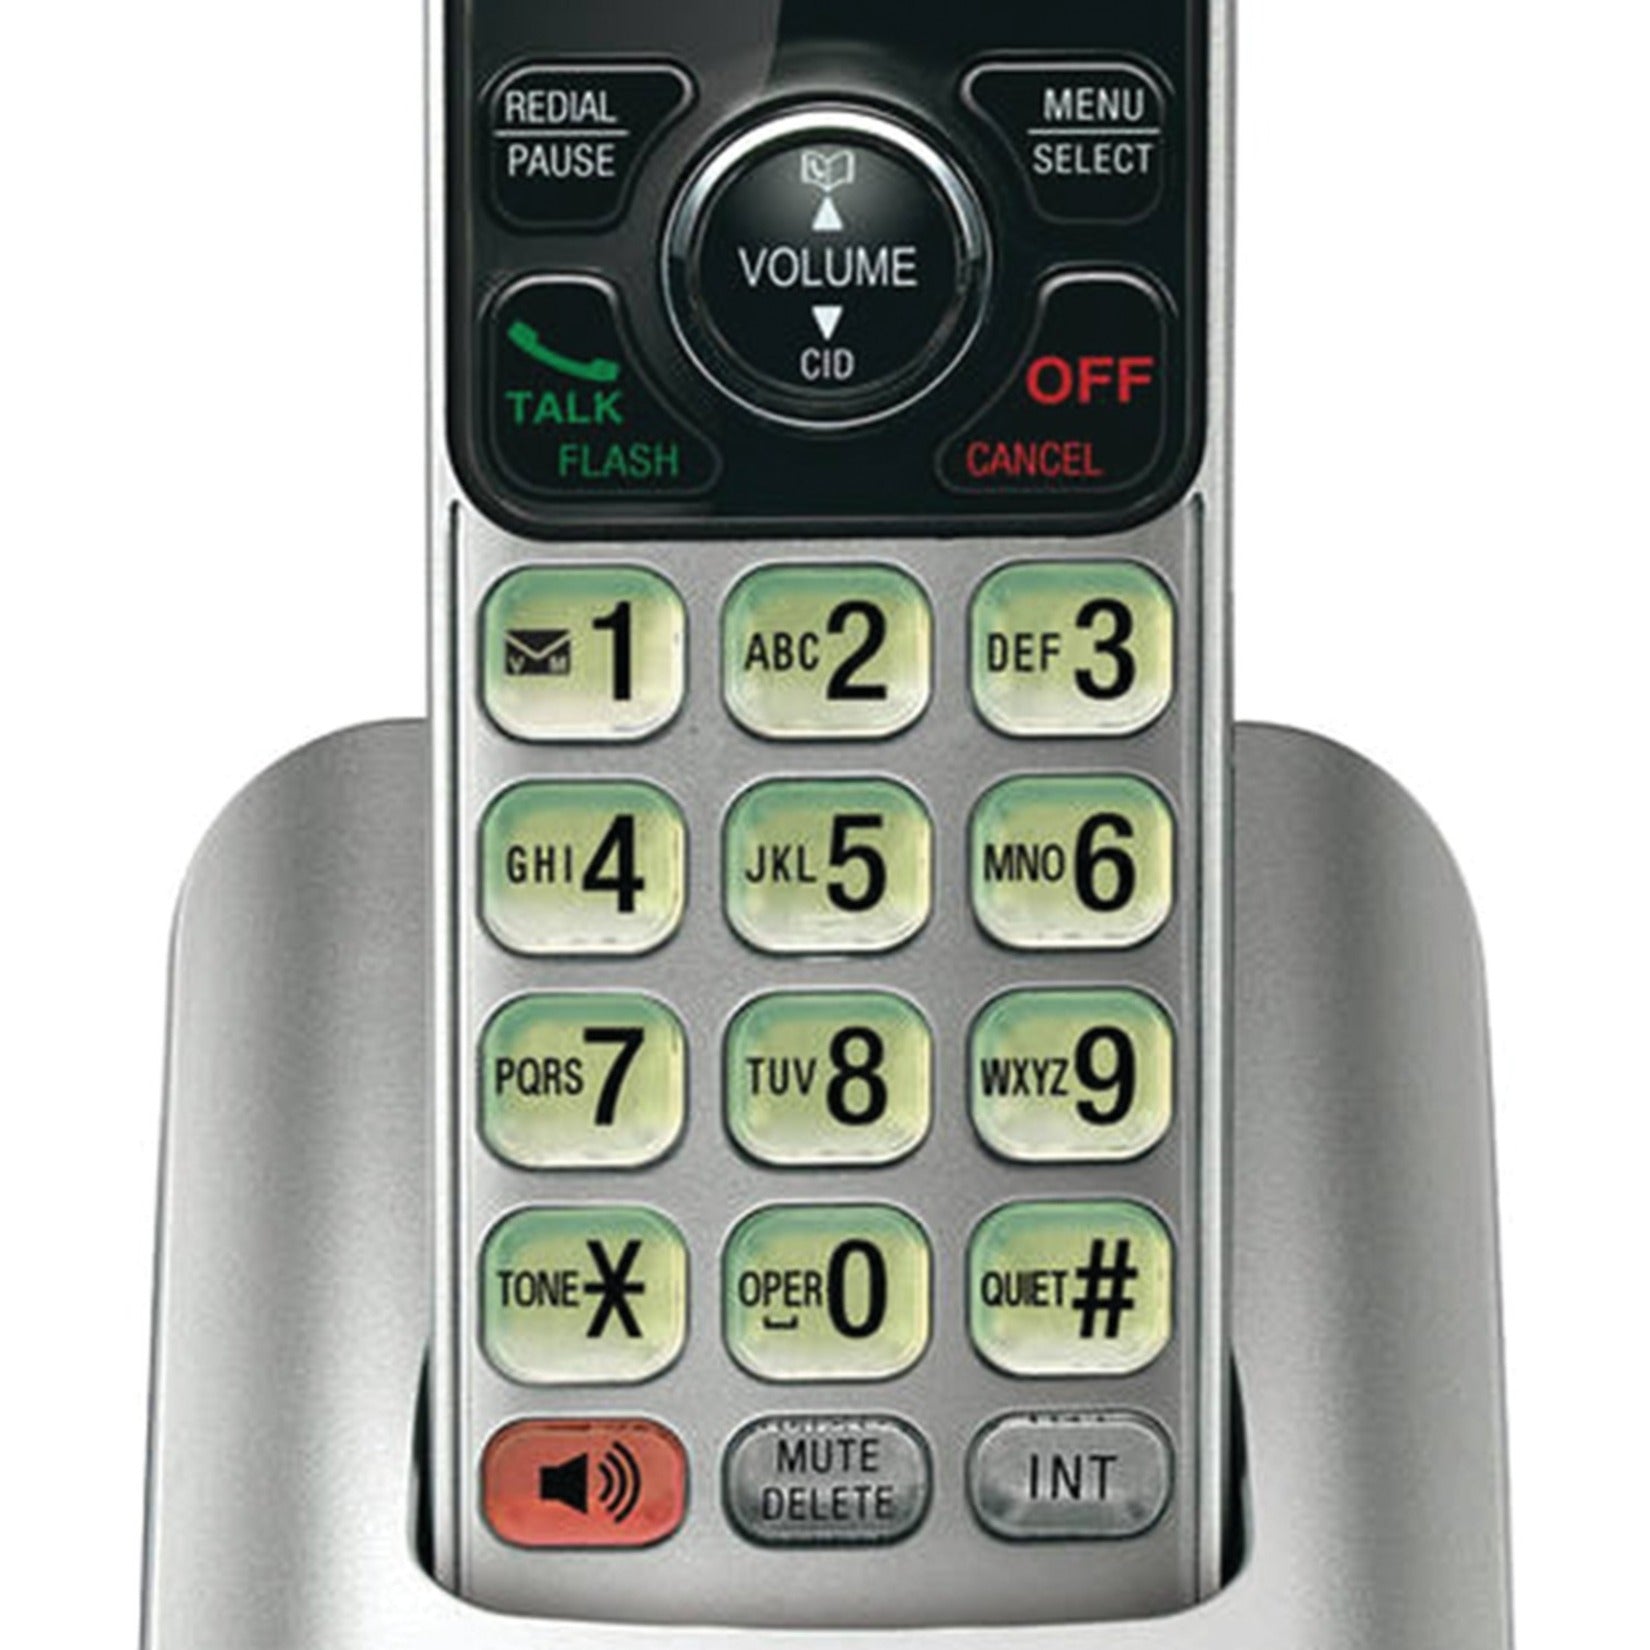 VTech VTCS6619-2 CS6619-2 DECT 6.0 Cordless Phone - Silver, Caller ID/Call Waiting, 2 Handsets, Backlit Display